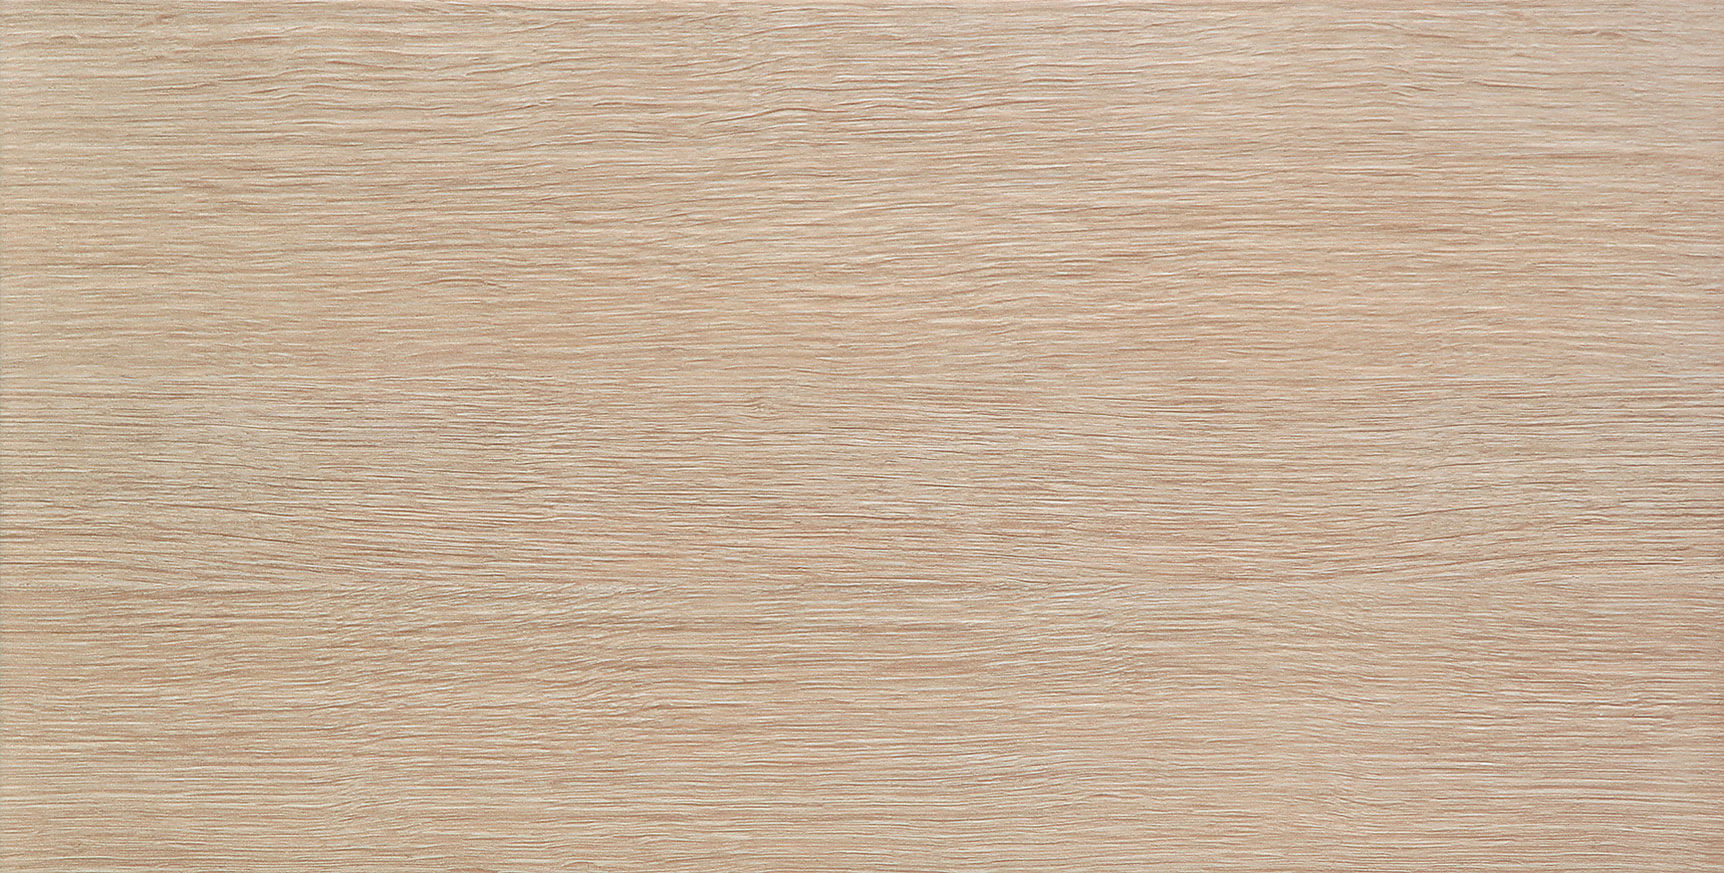 Tubadzin Biloba beige 30,8x60,8 см Настенная плитка